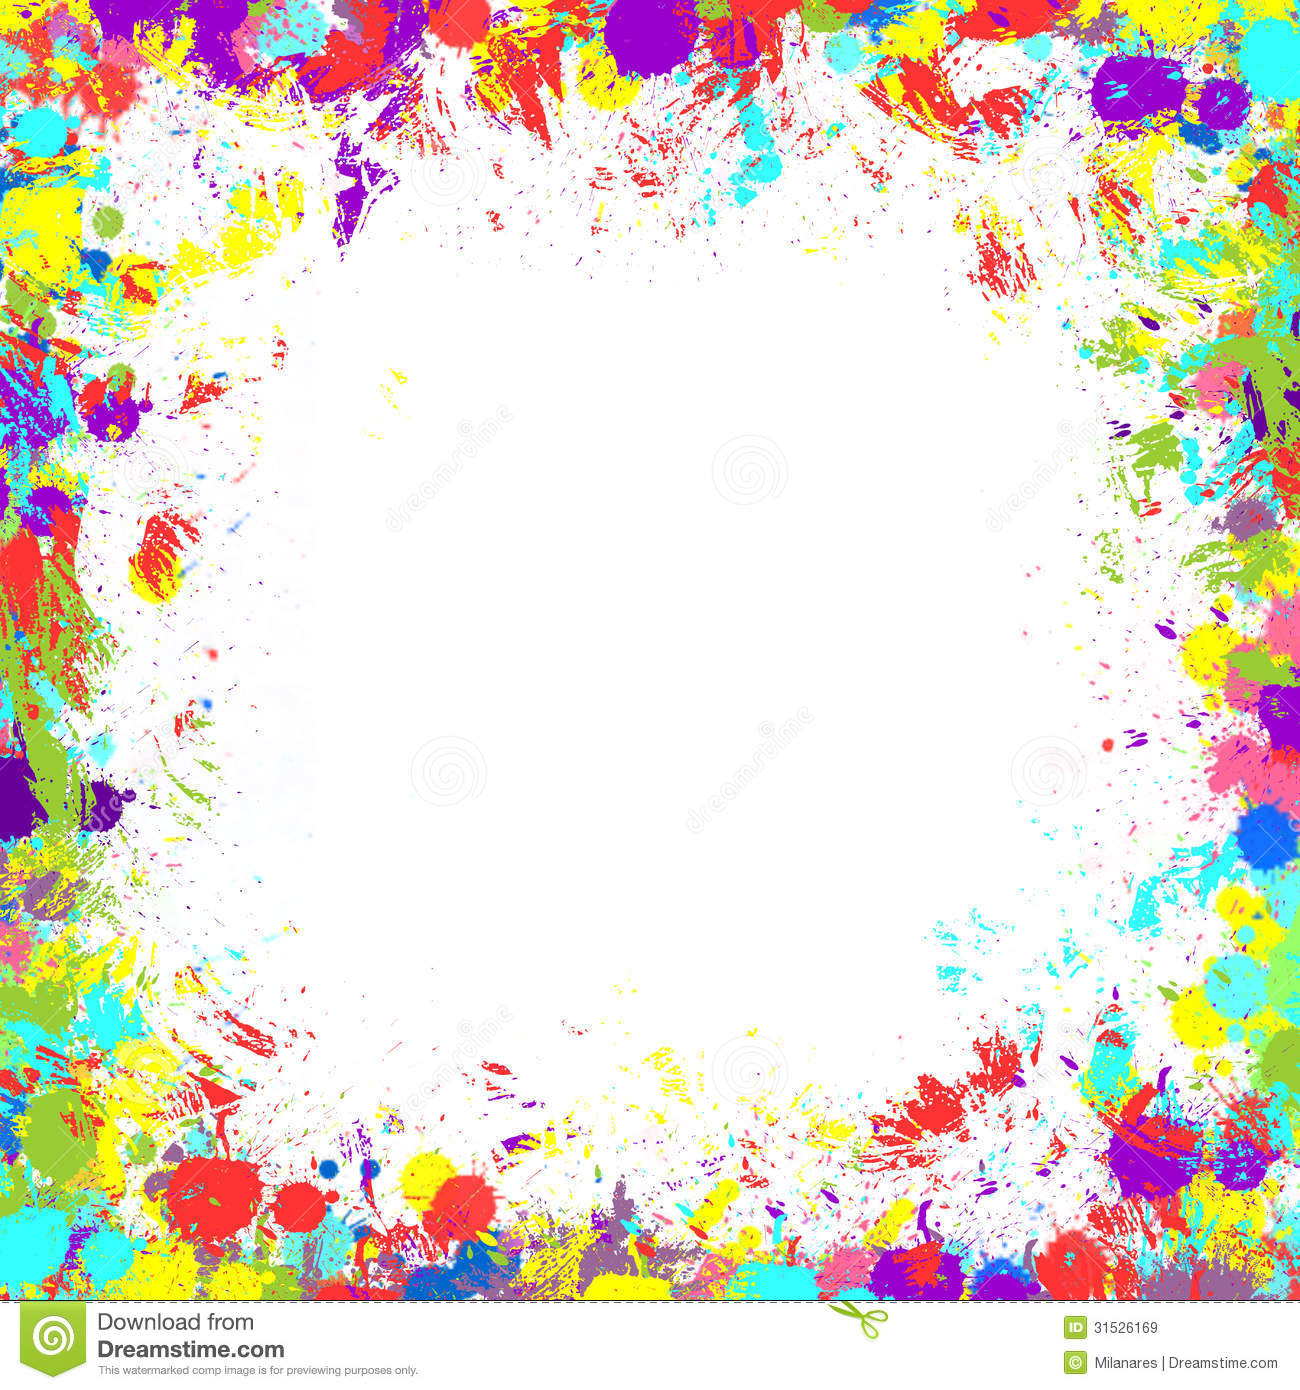 Colorful Inky Splash Frame Border Royalty Free Stock Images   Image